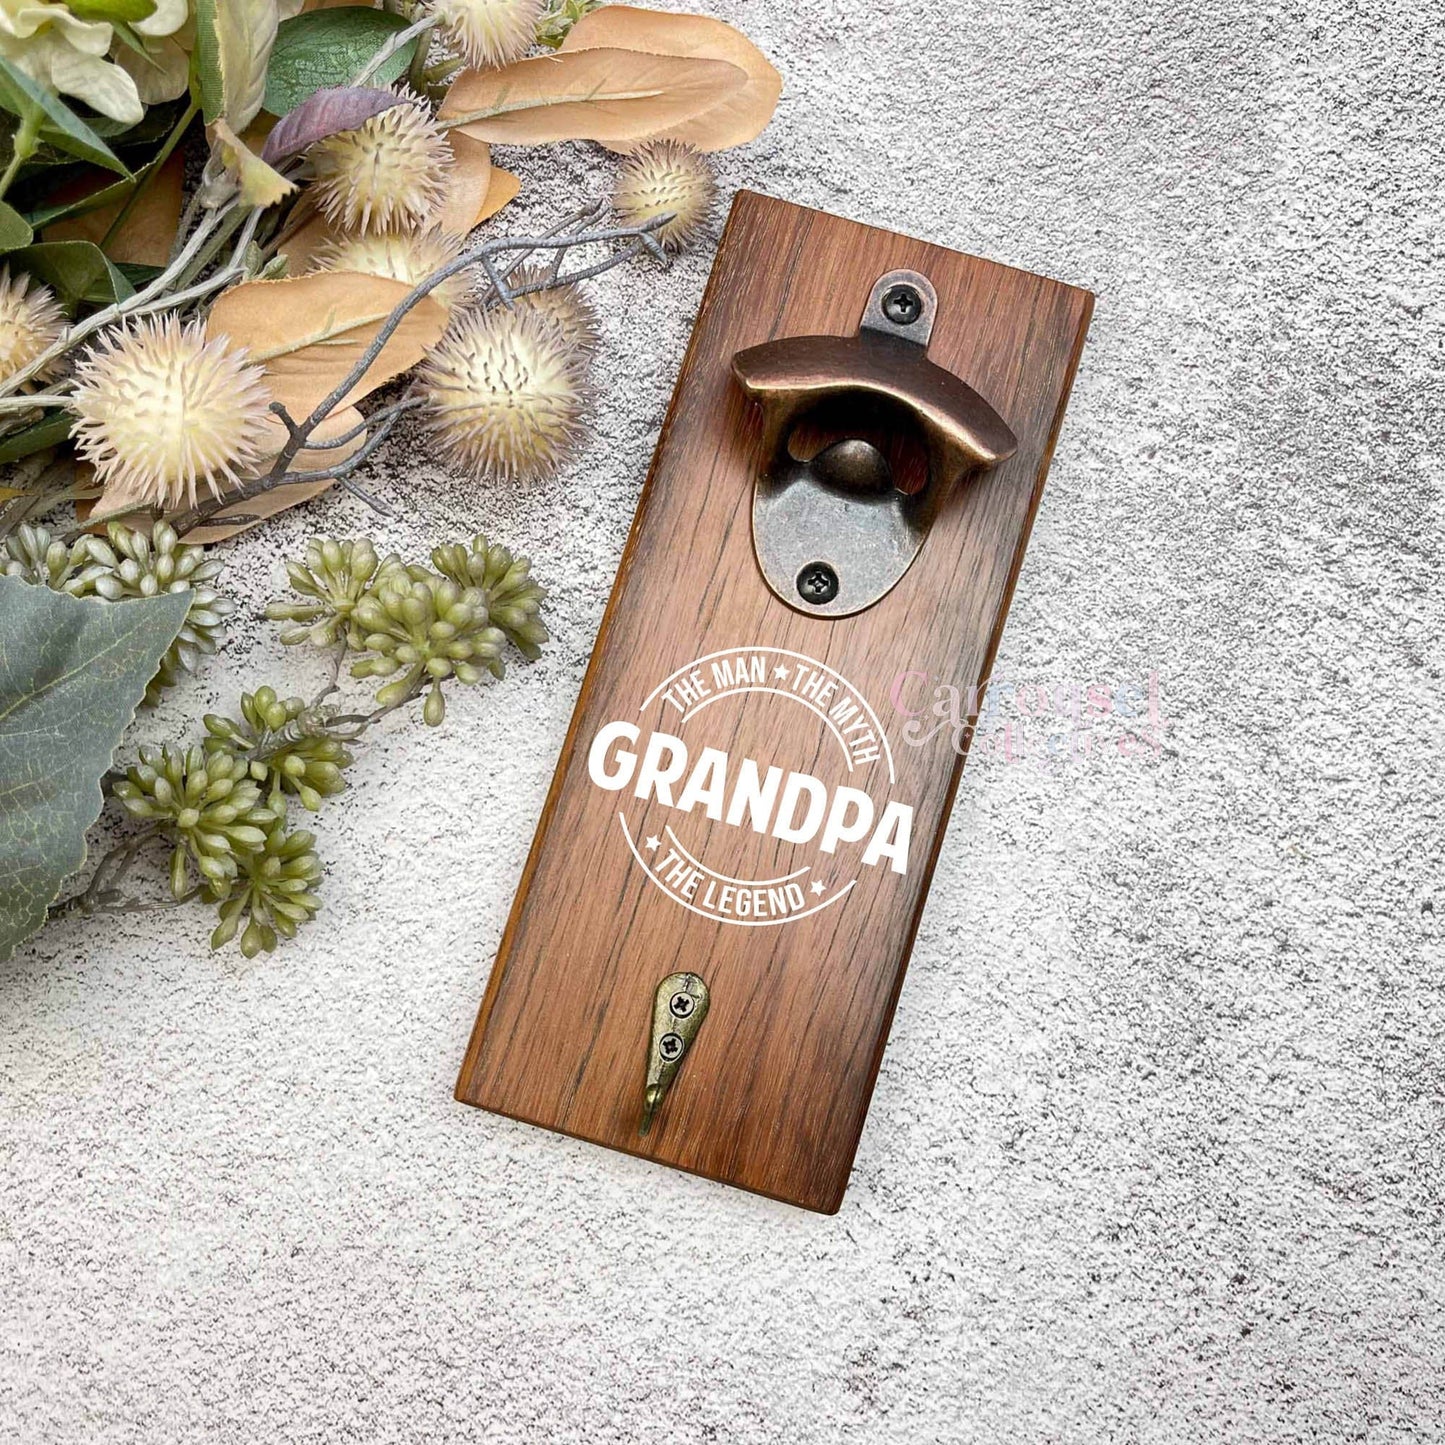 The man the myth the legend Grandpa bottle opener sign, Australian ironbark hardwood sign